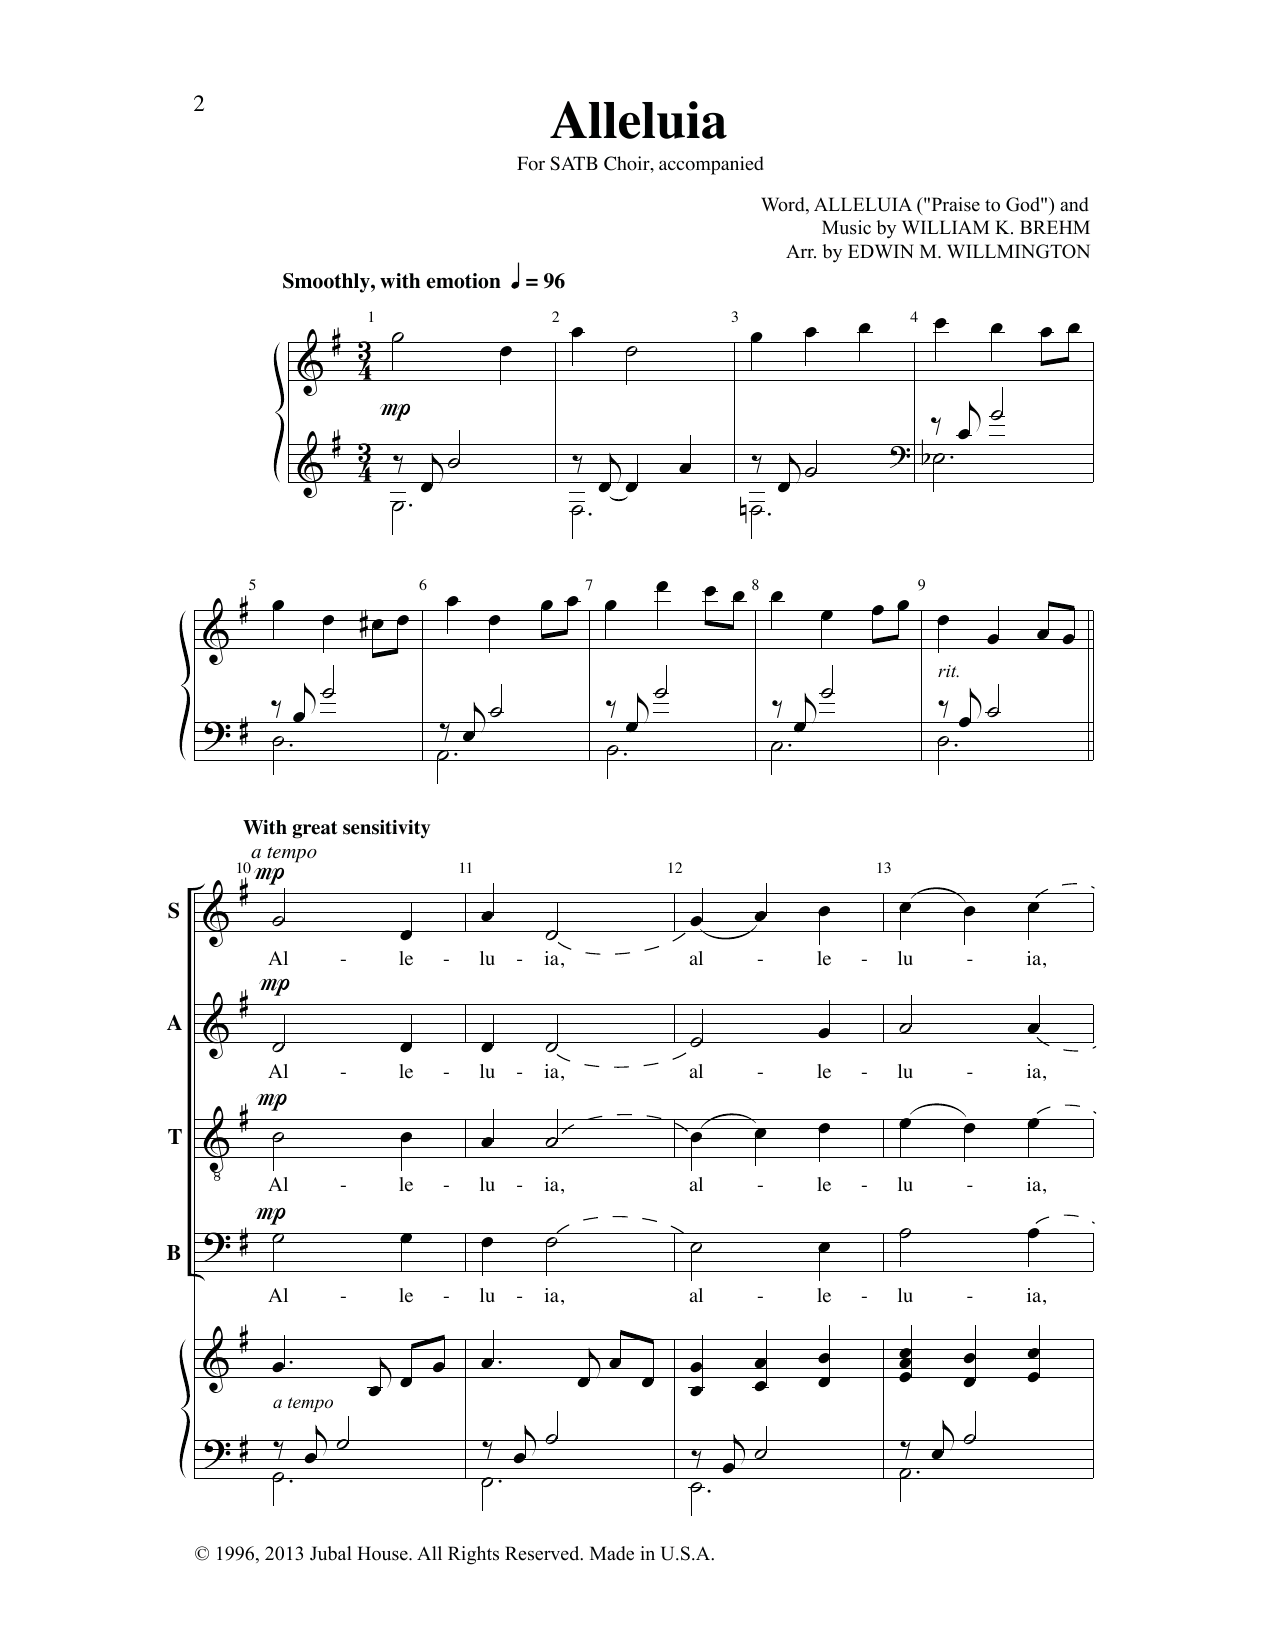 William K. Brehm Alleluia (arr. Edwin M. Willmington) sheet music notes and chords arranged for SATB Choir